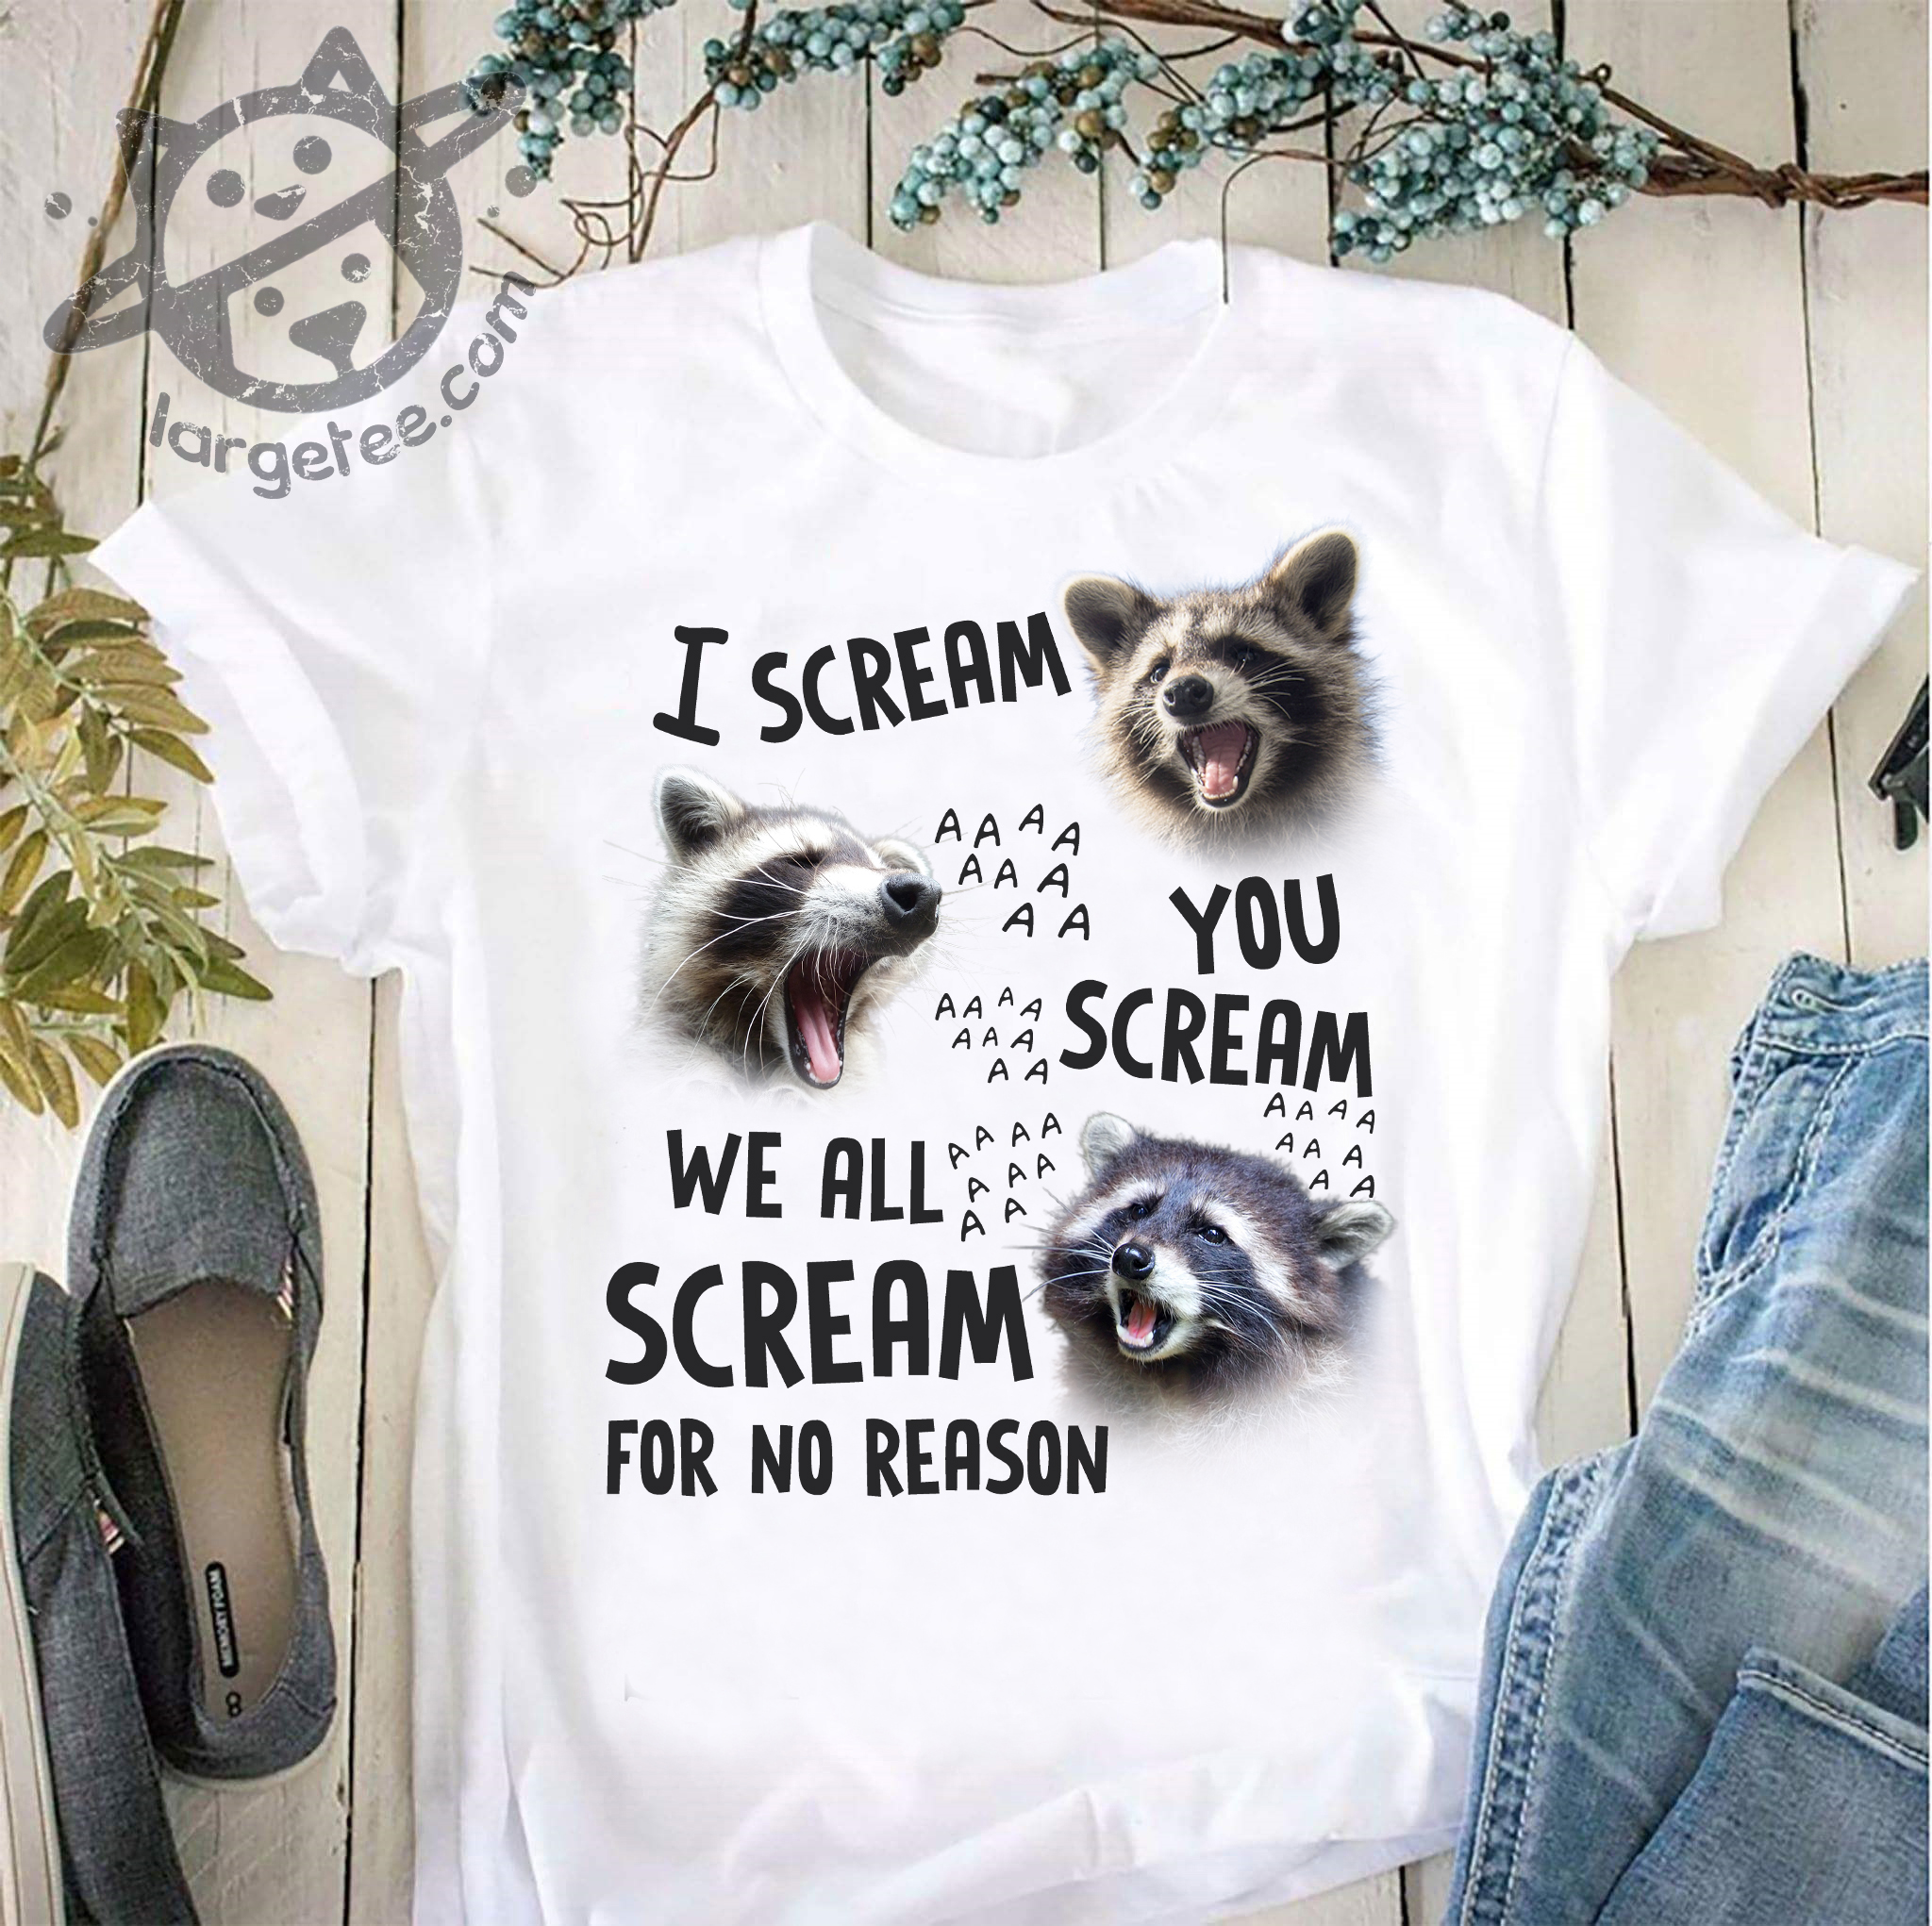 I scream you scream we all scream for no reason - Racoon